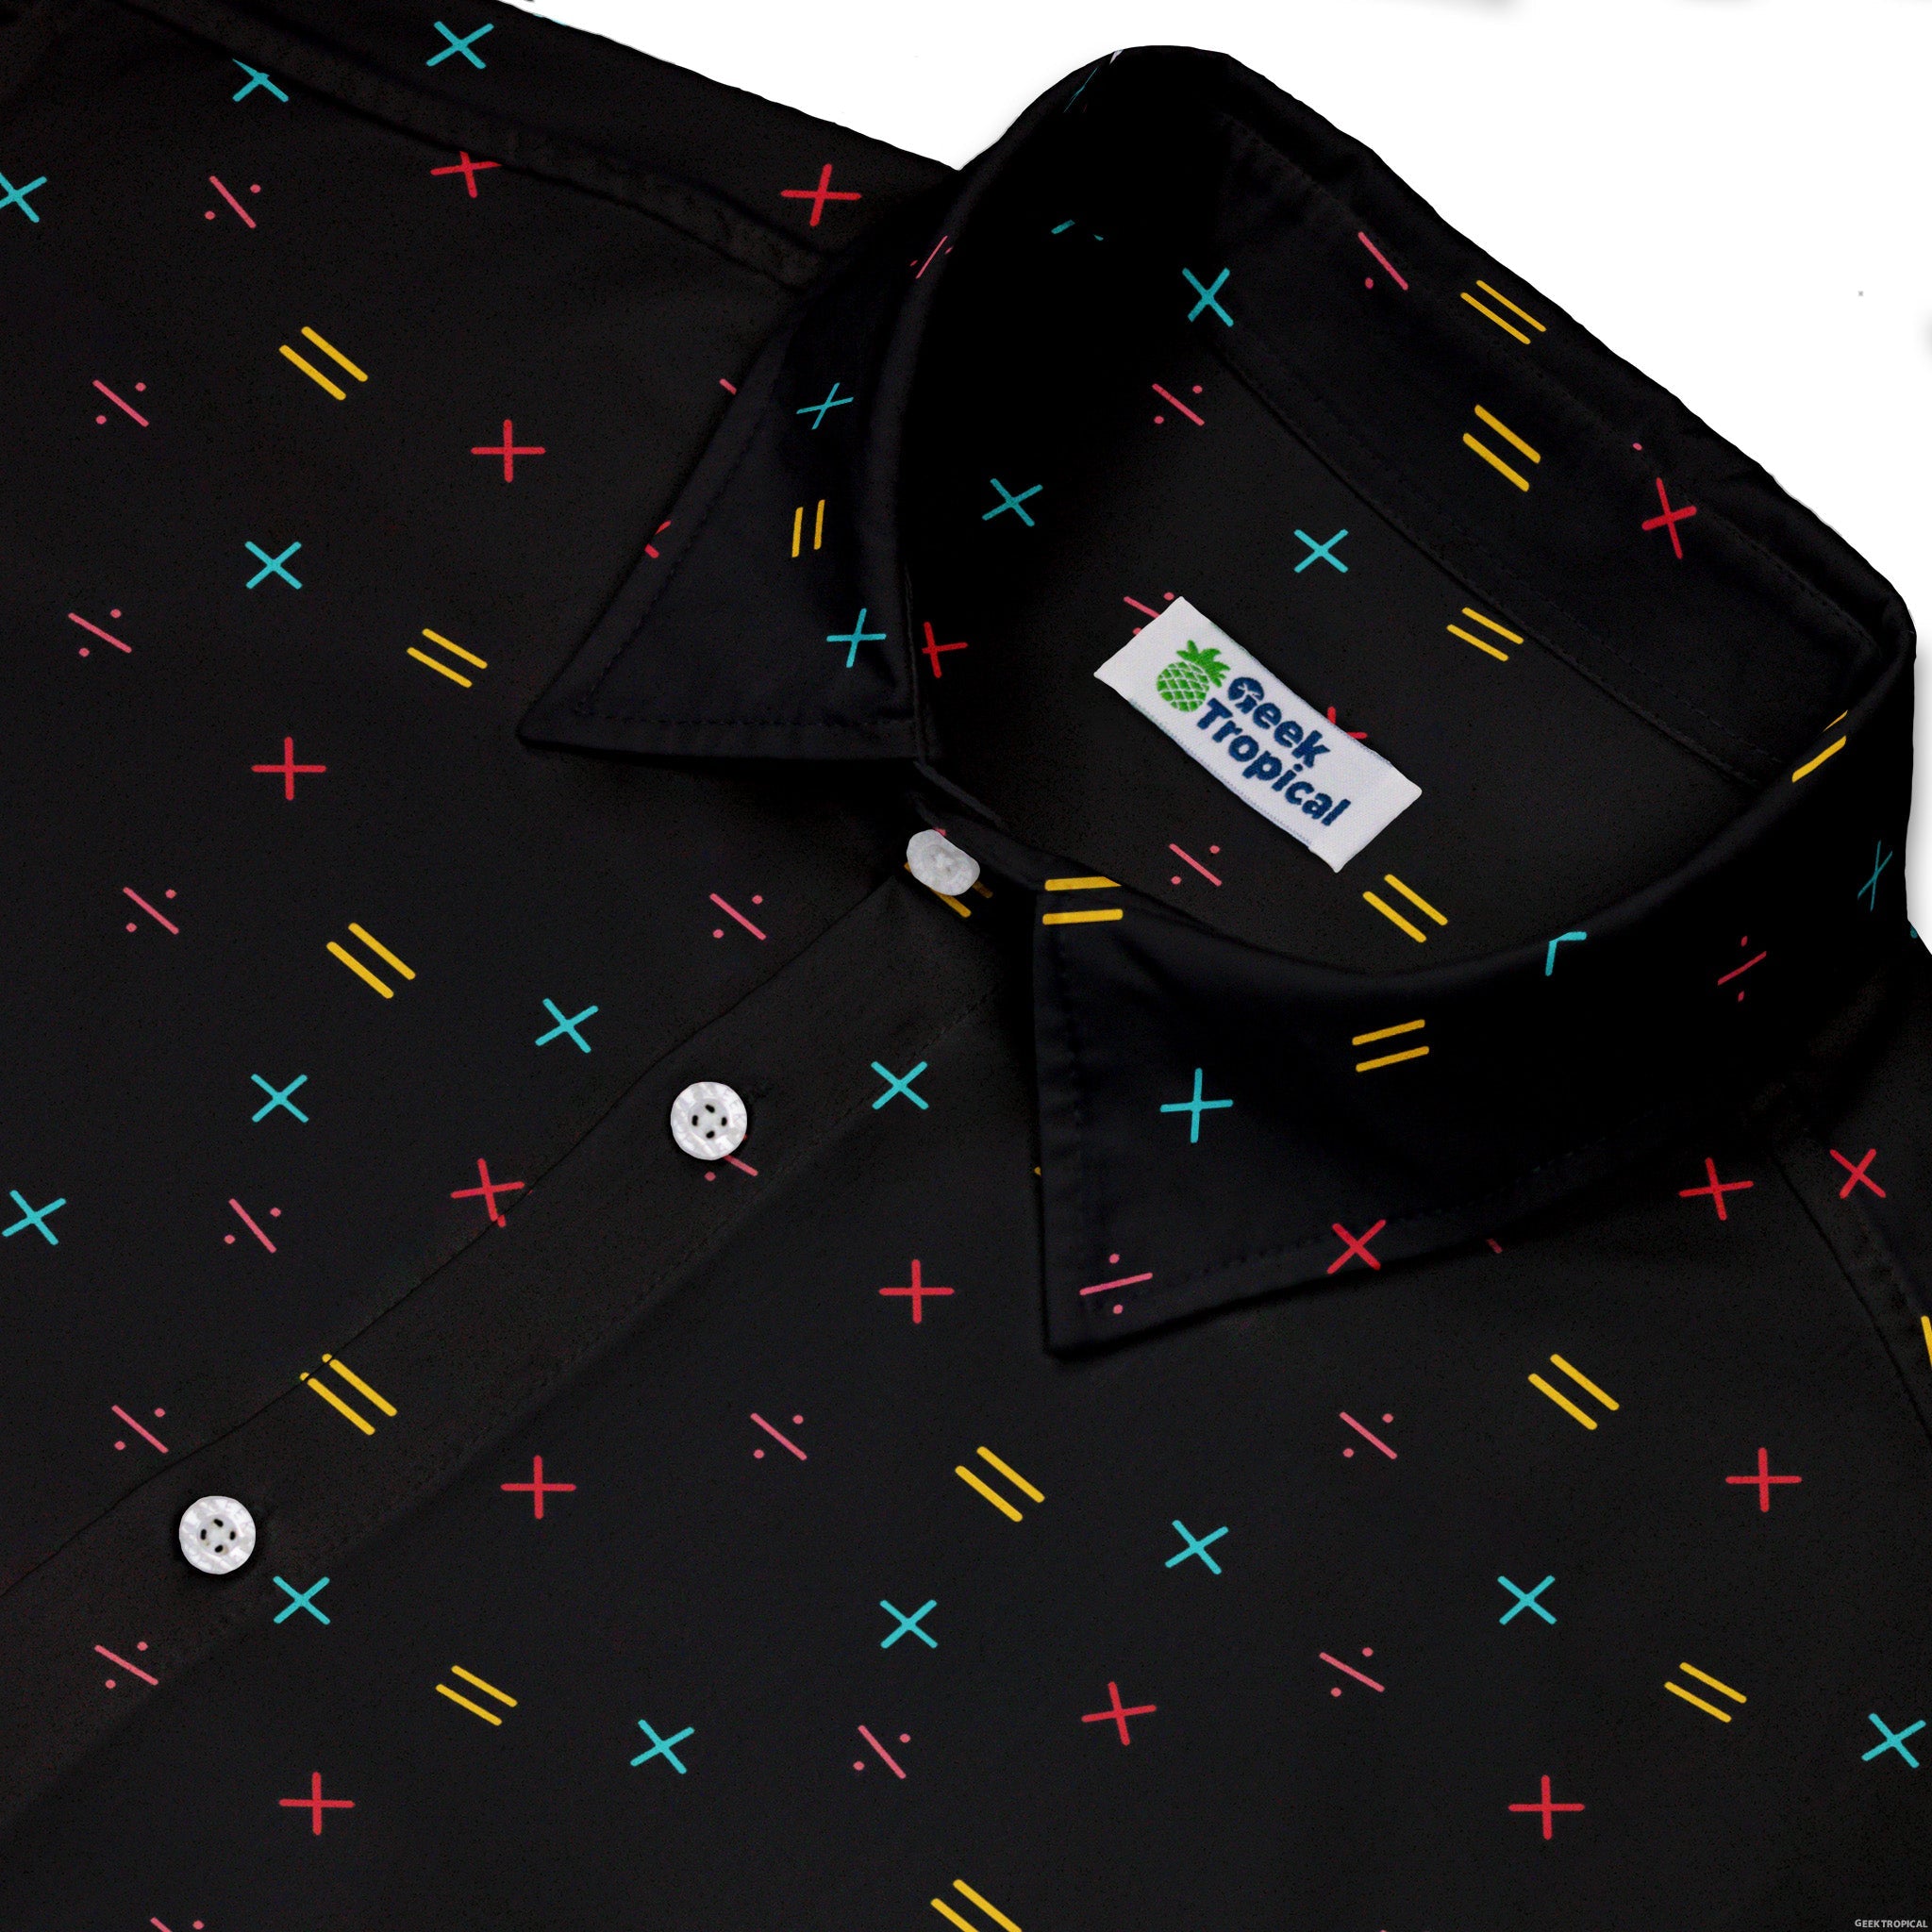 Math Symbols Black Button Up Shirt - adult sizing - mathematics print - Simple Patterns